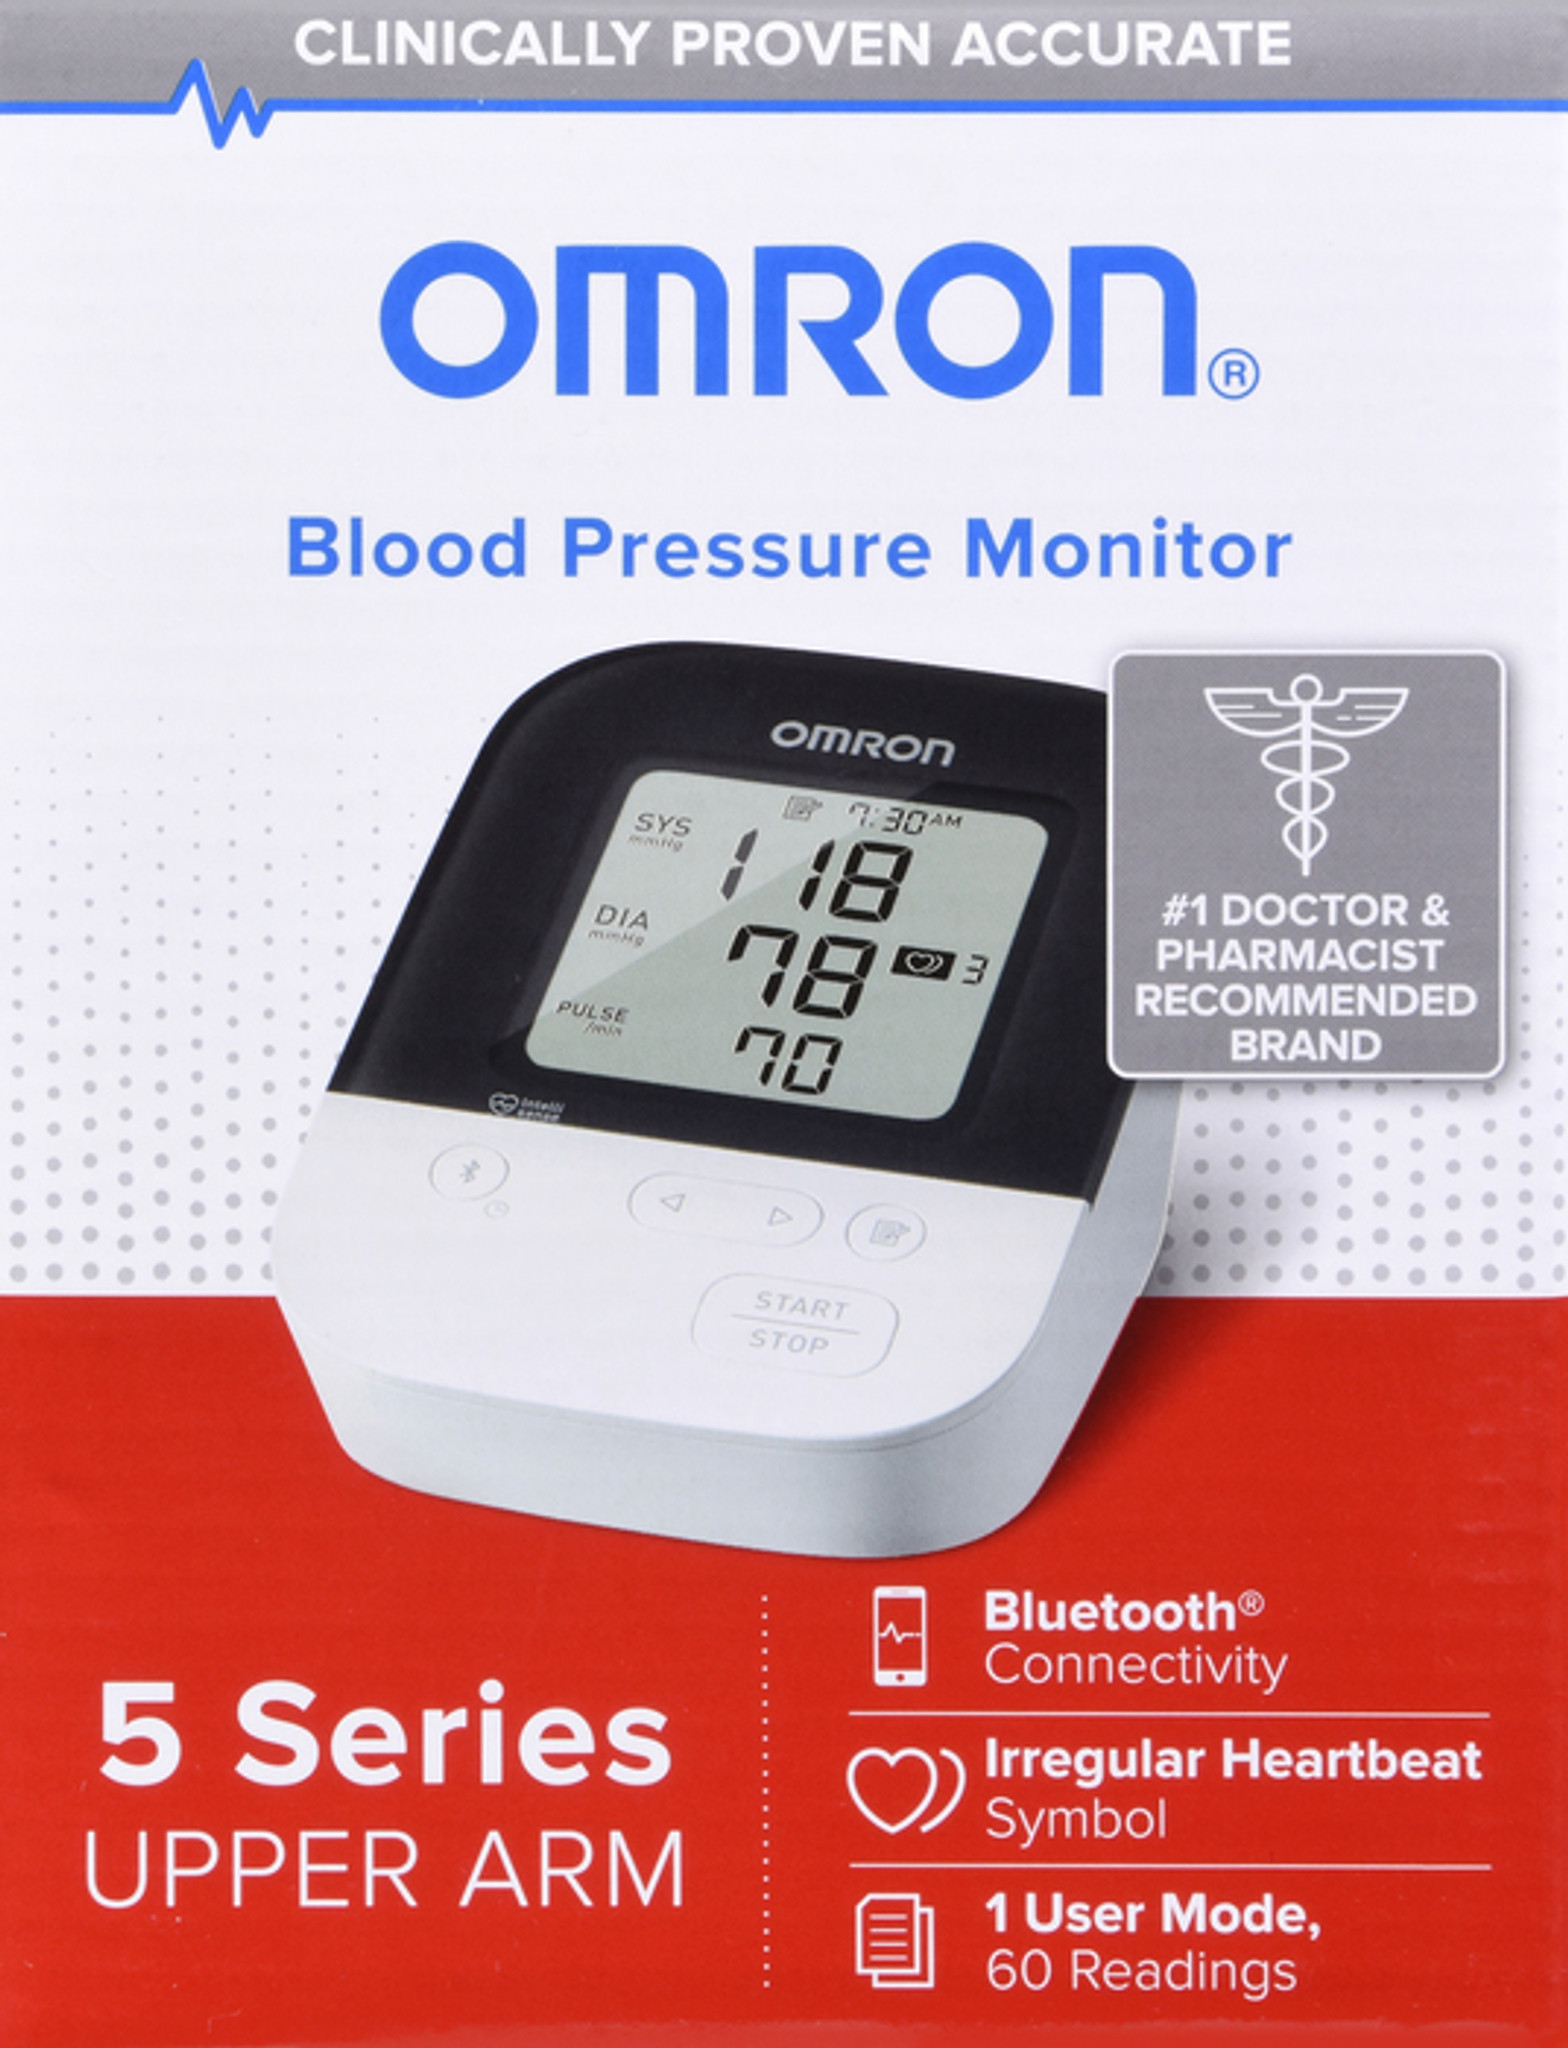 UA-767F Upper Arm Blood Pressure Monitor – A&D Instruments UK Medical